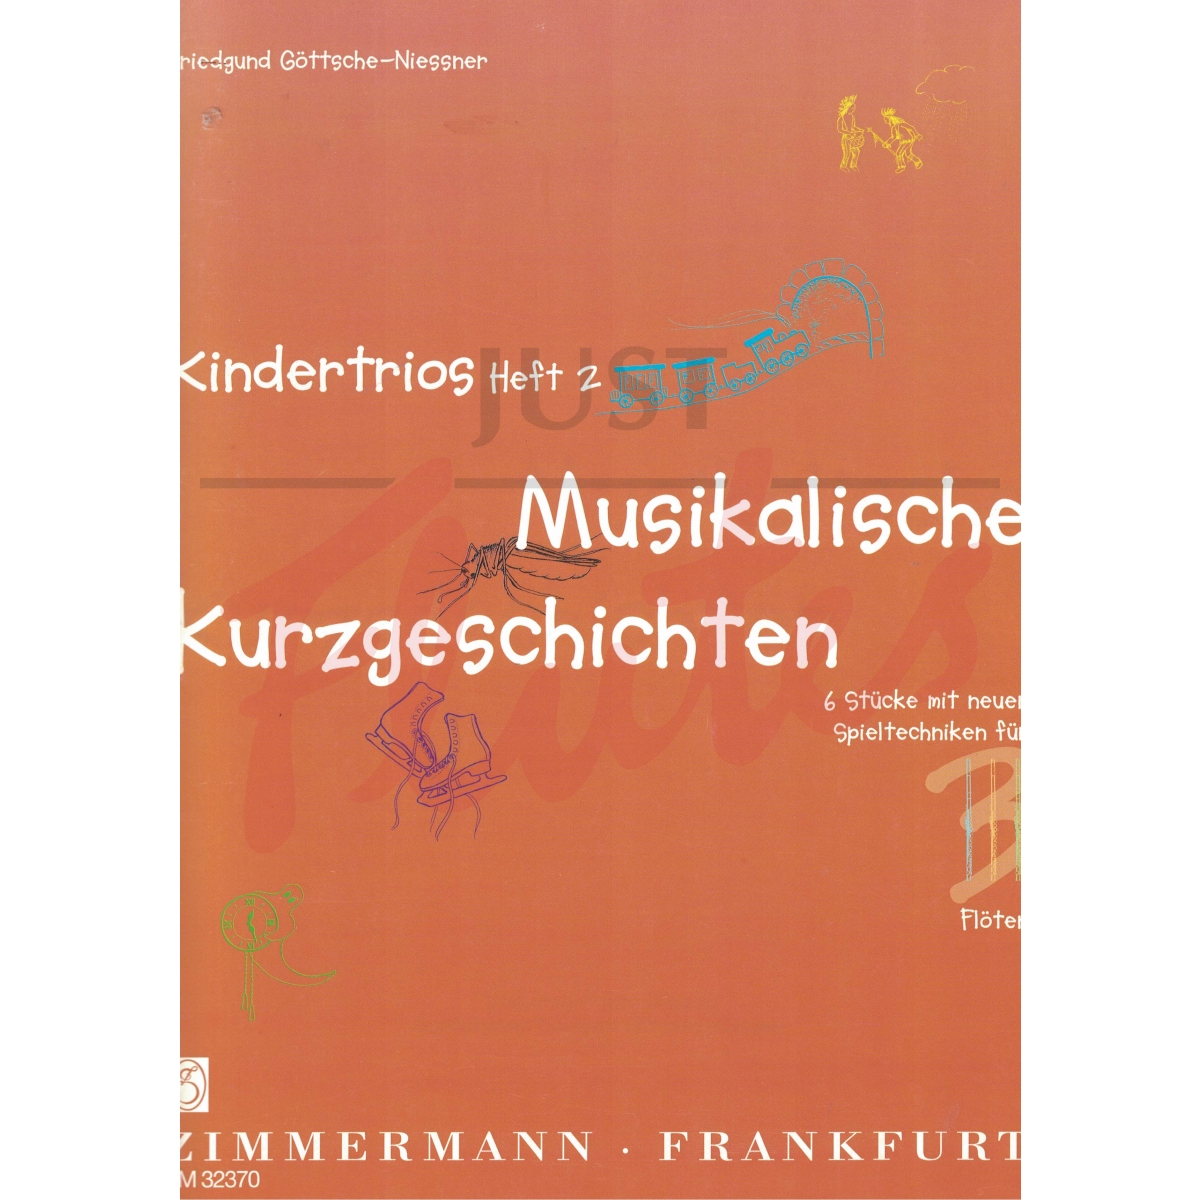 Children&#039;s Trios, Book 2: Musical Short Stories for Three Flutes